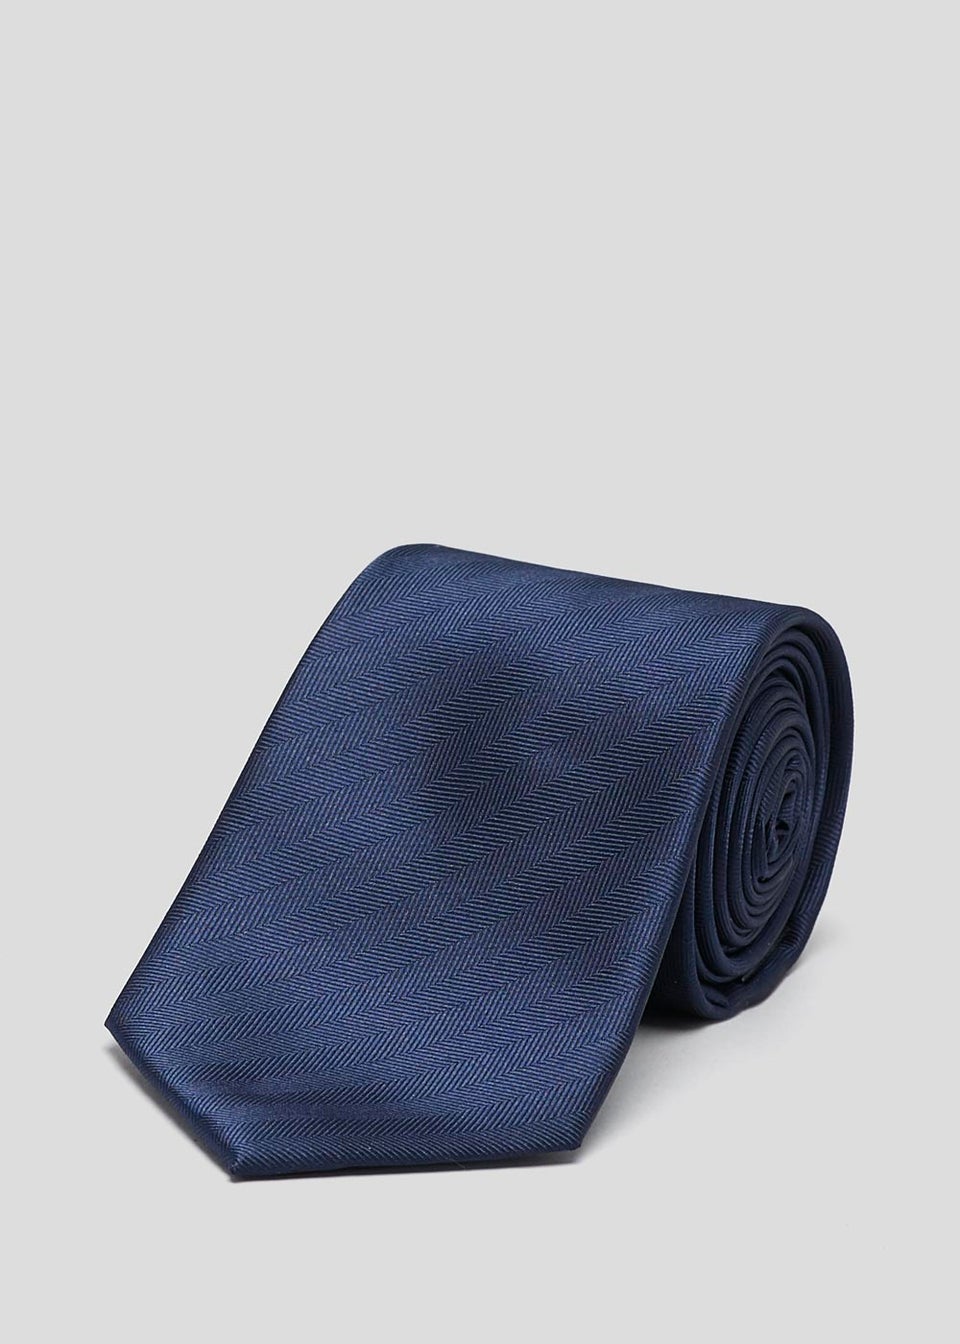 Taylor & Wright Navy Texture Tie